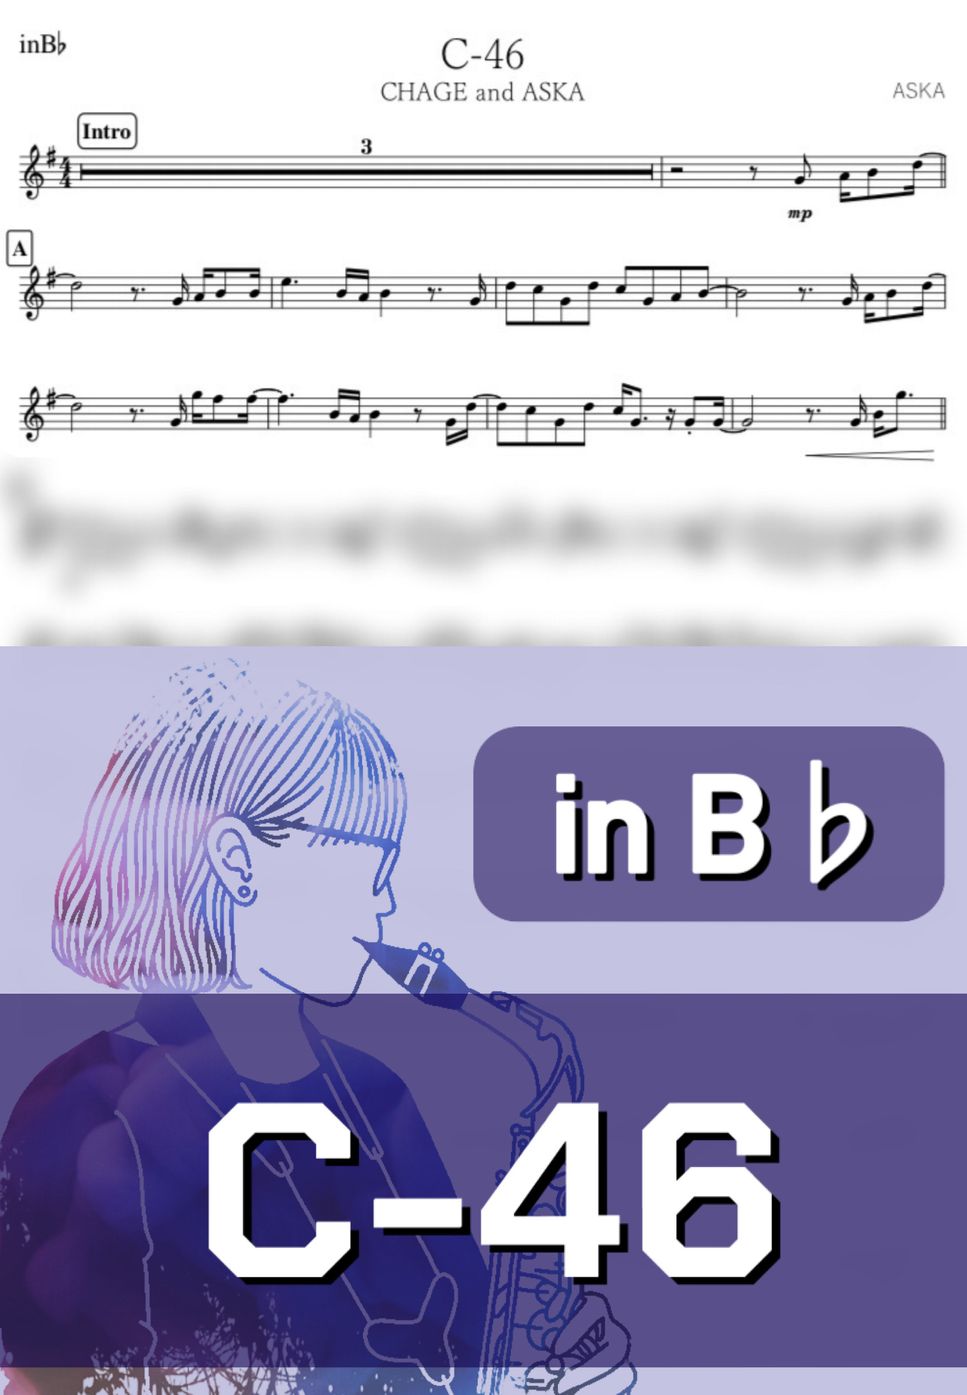 CHAGE and ASKA - C-46 (B♭) by kanamusic